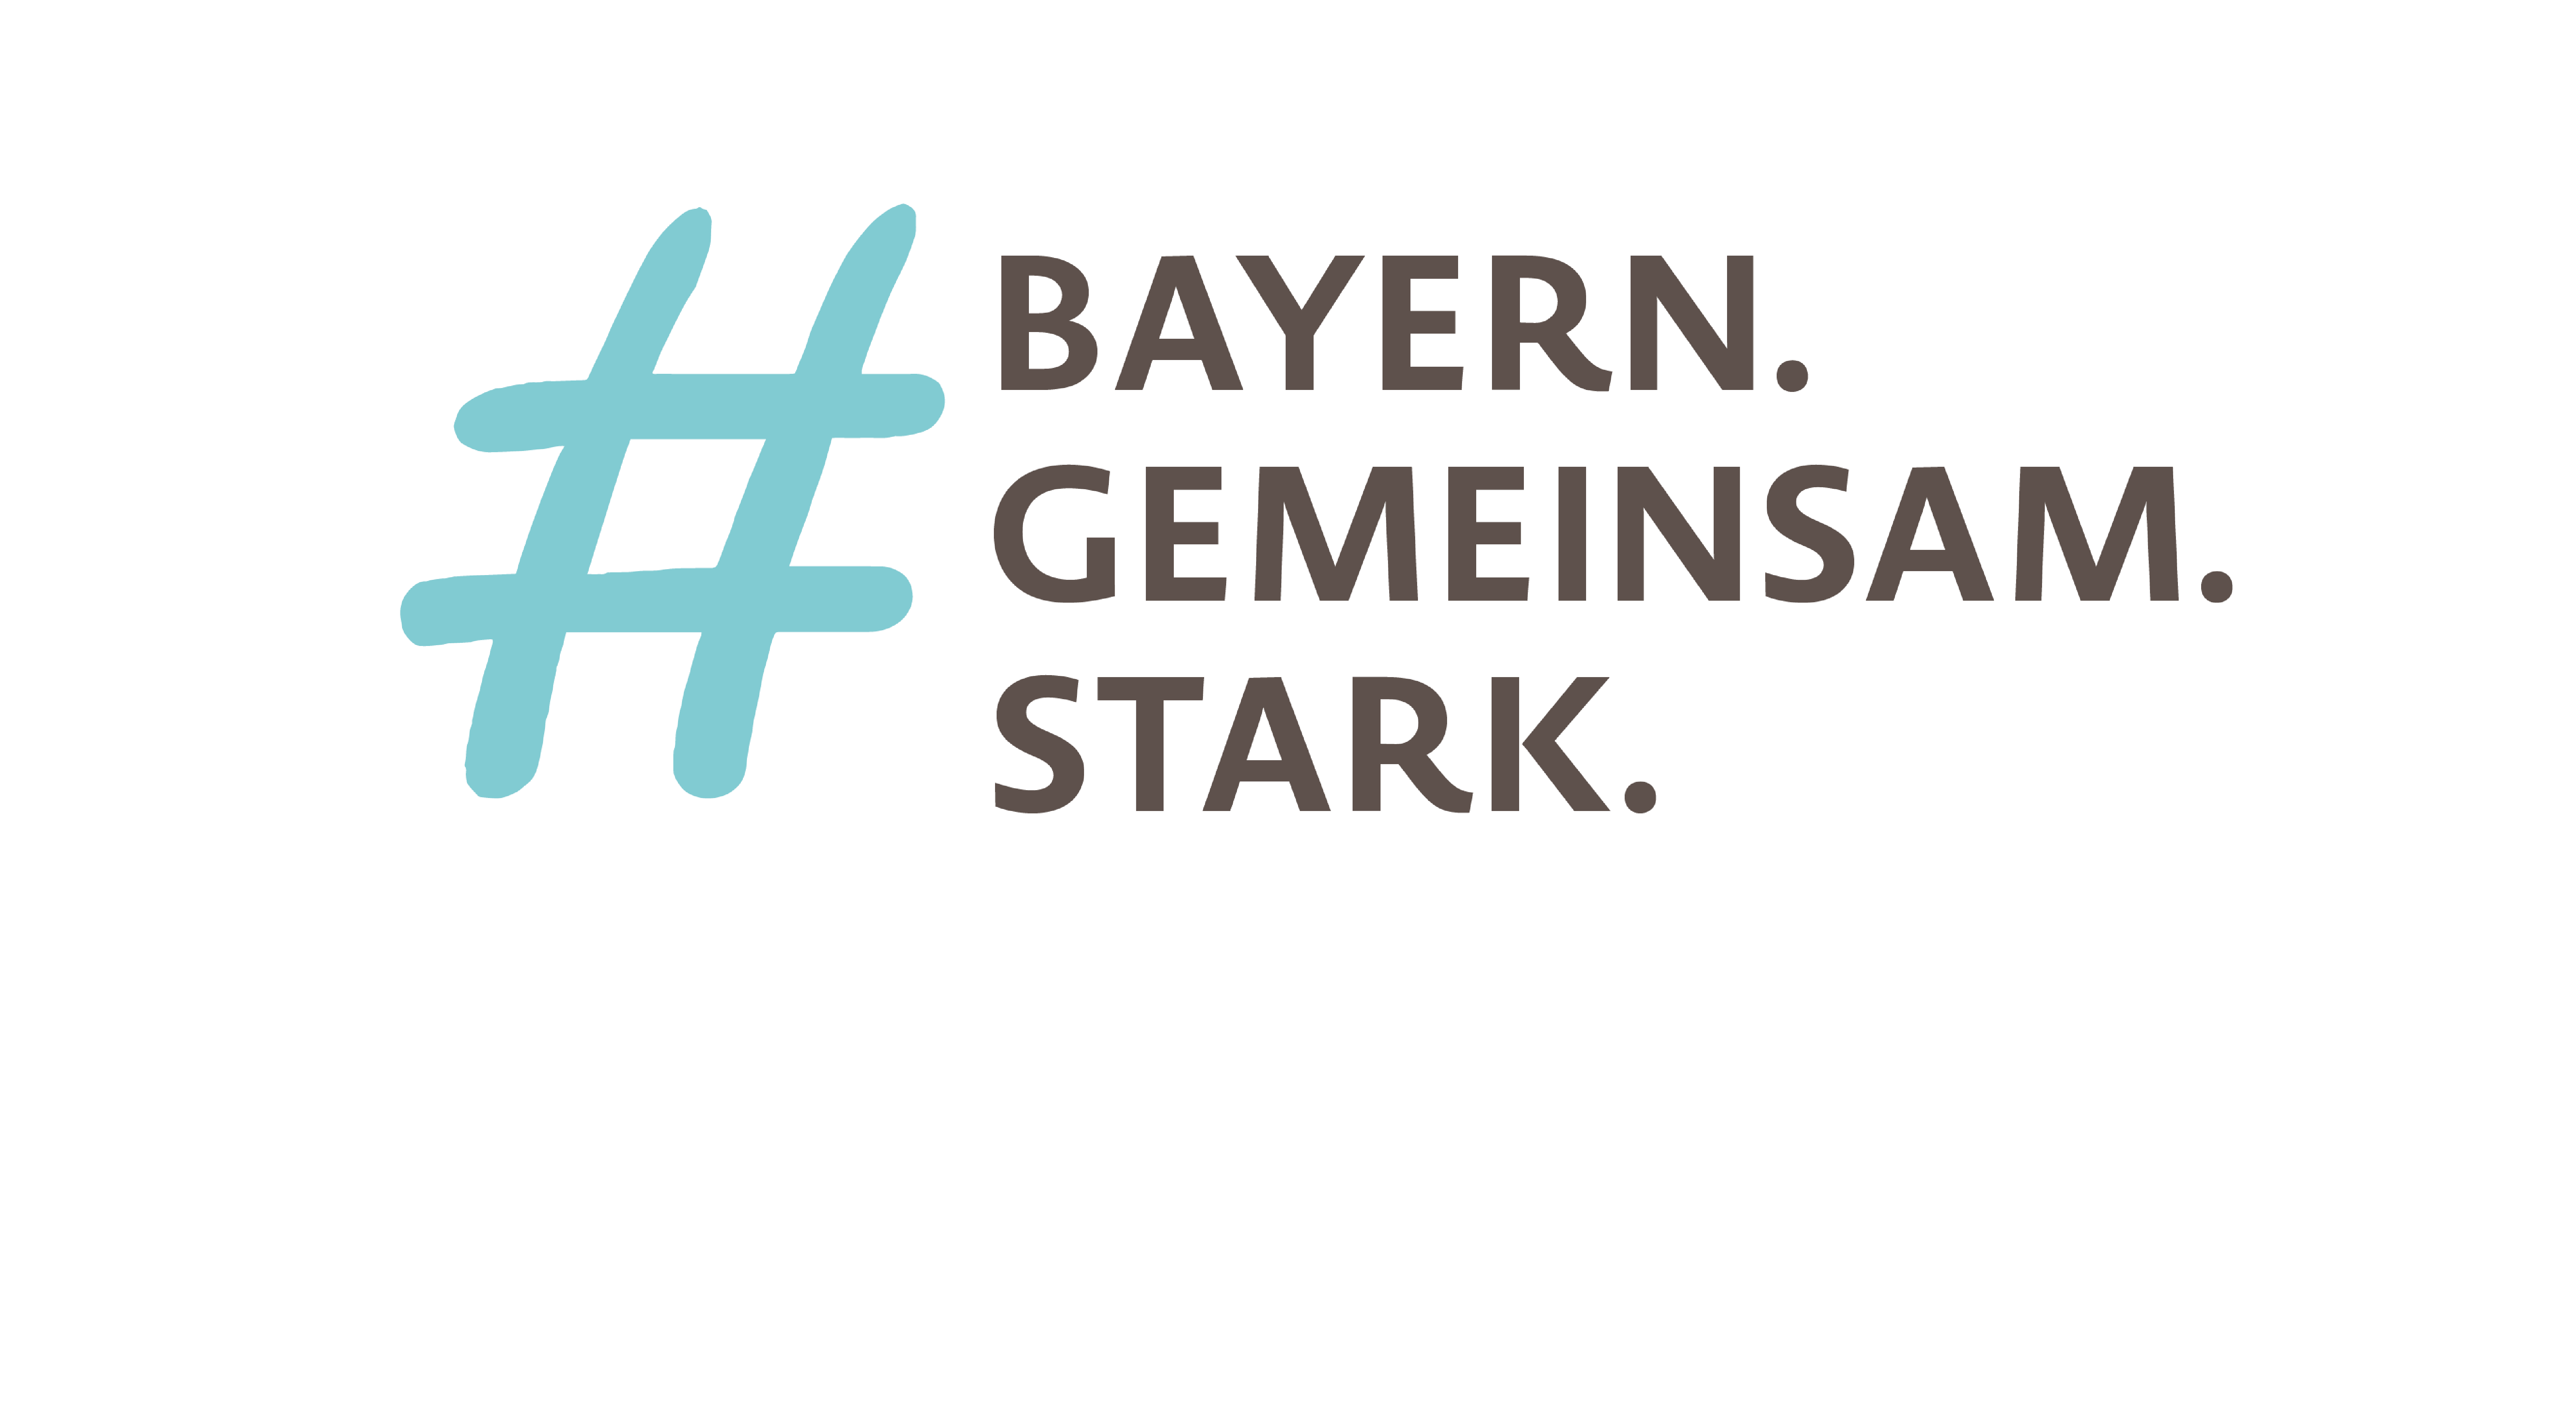 Hashtag Bayern. Gemeinsam. Stark.